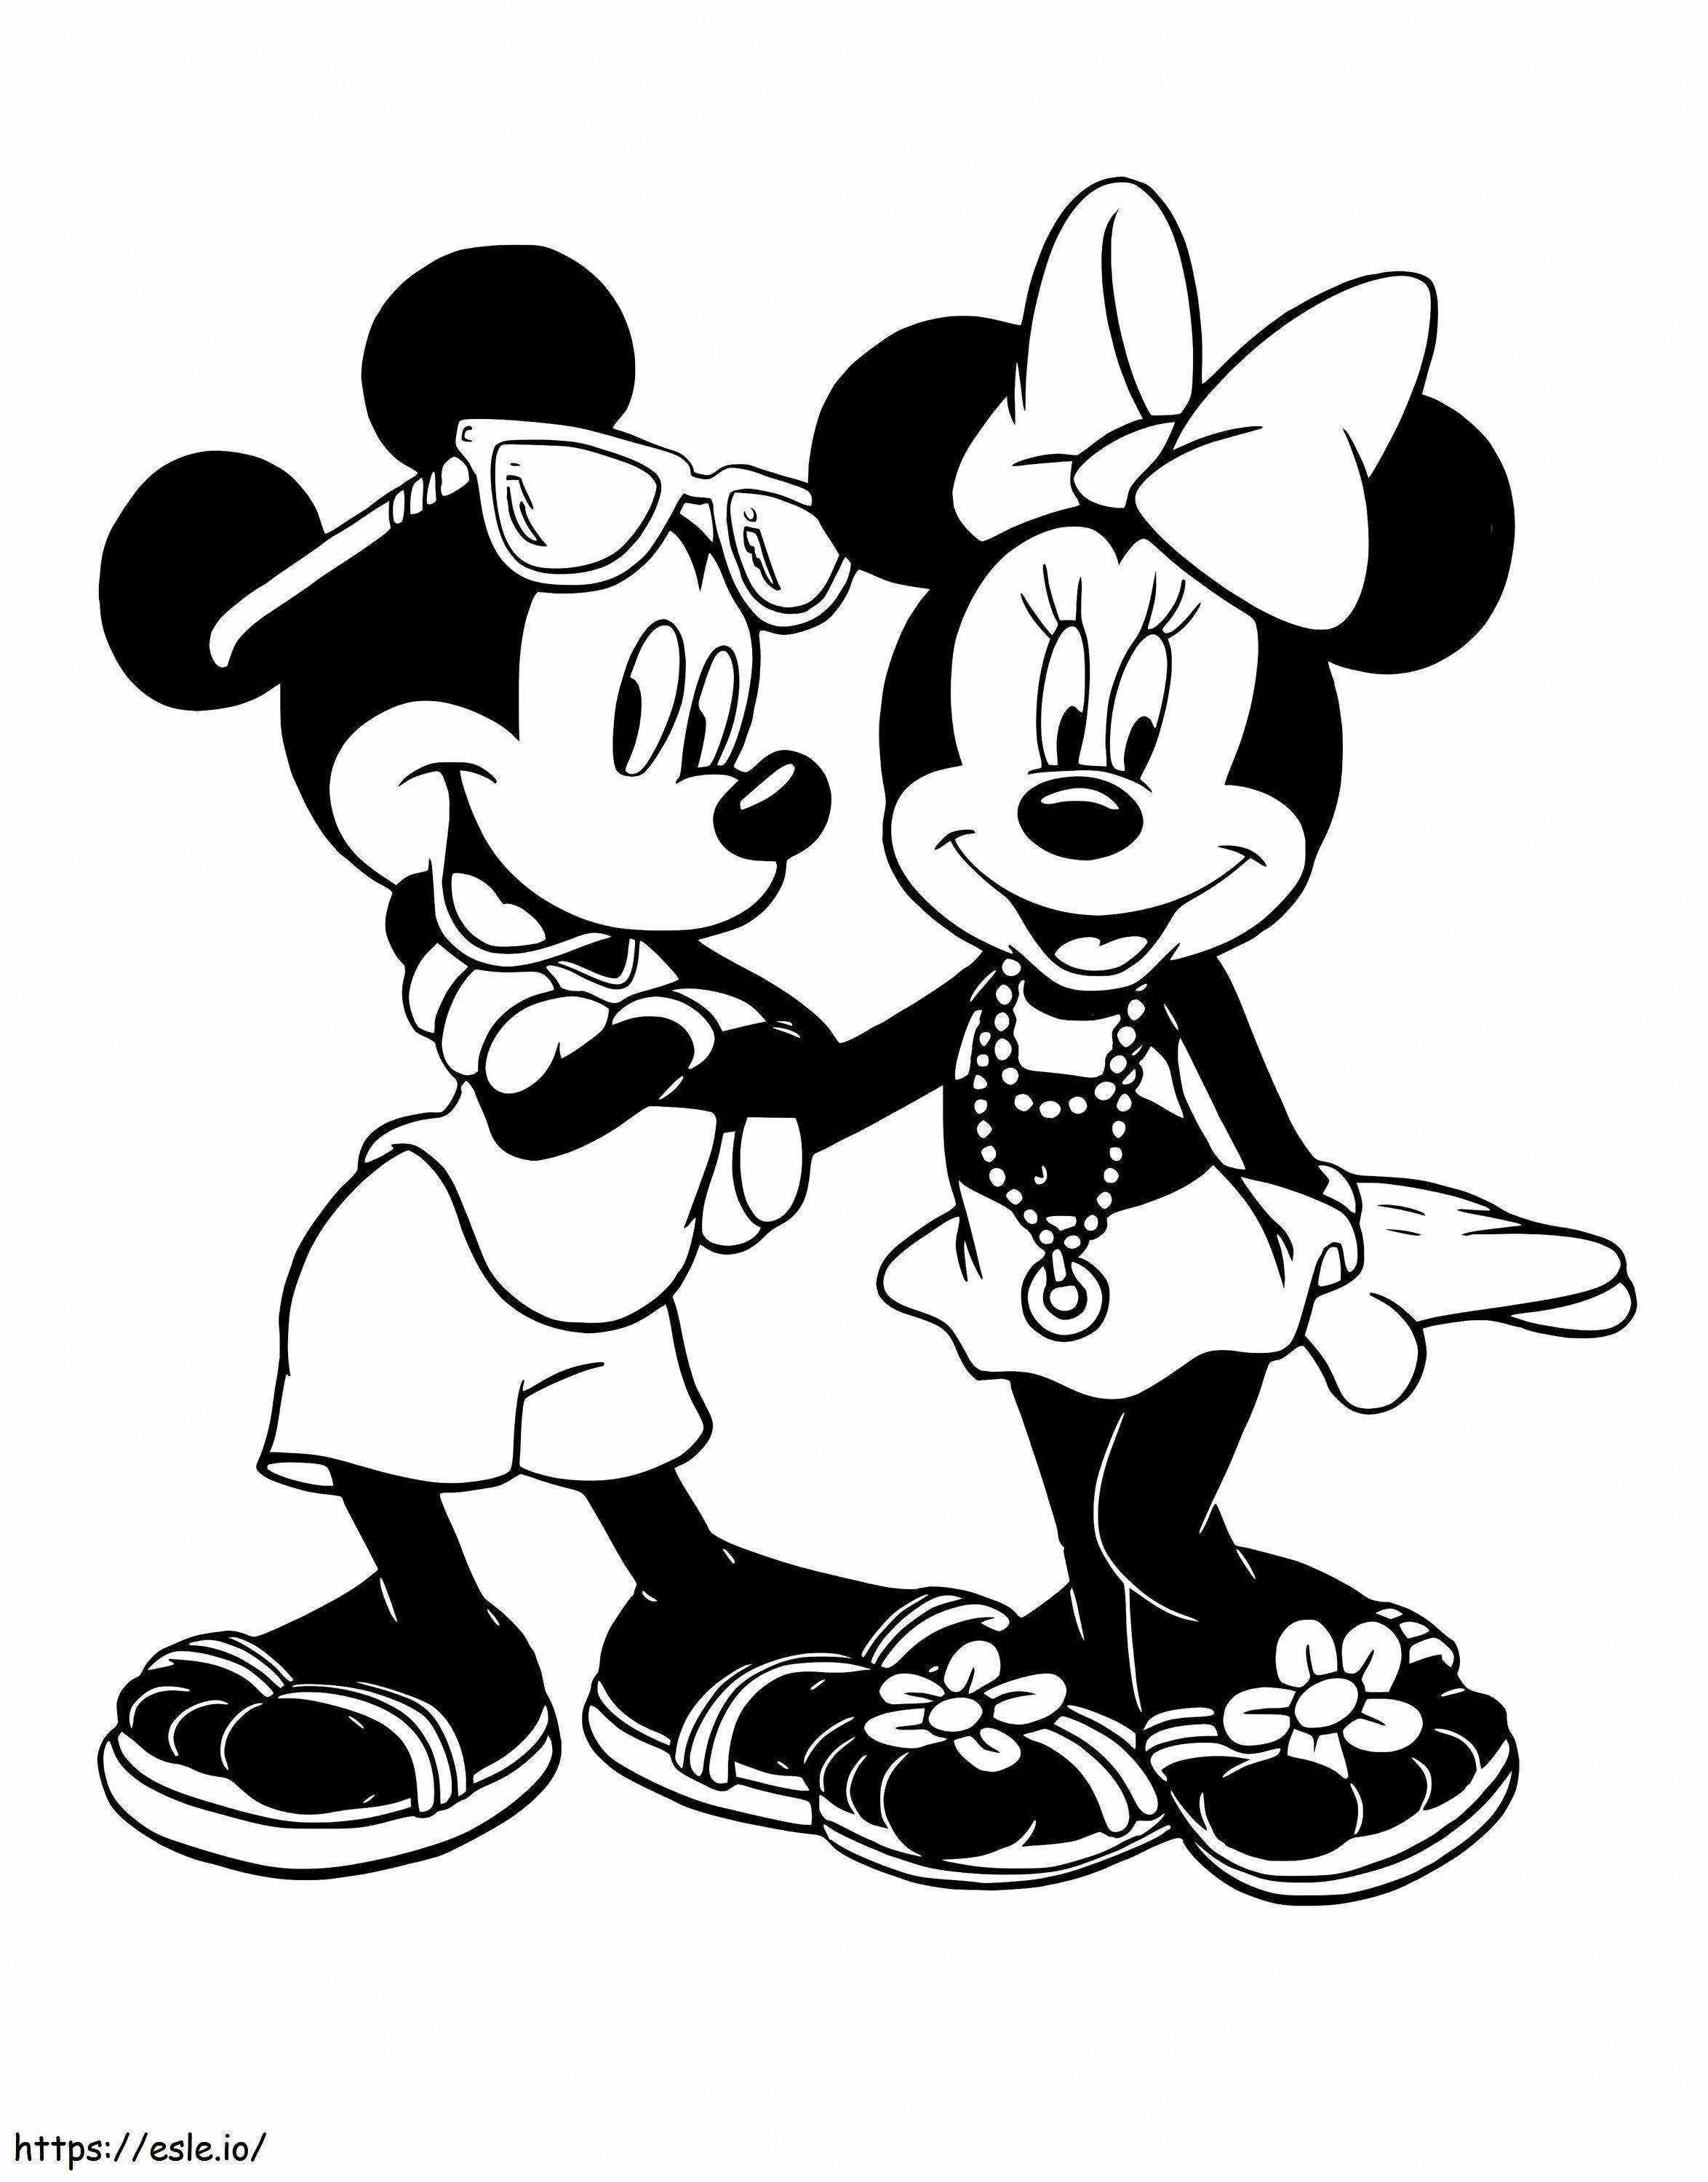 Büyük Mickey ve Minnie Fare boyama